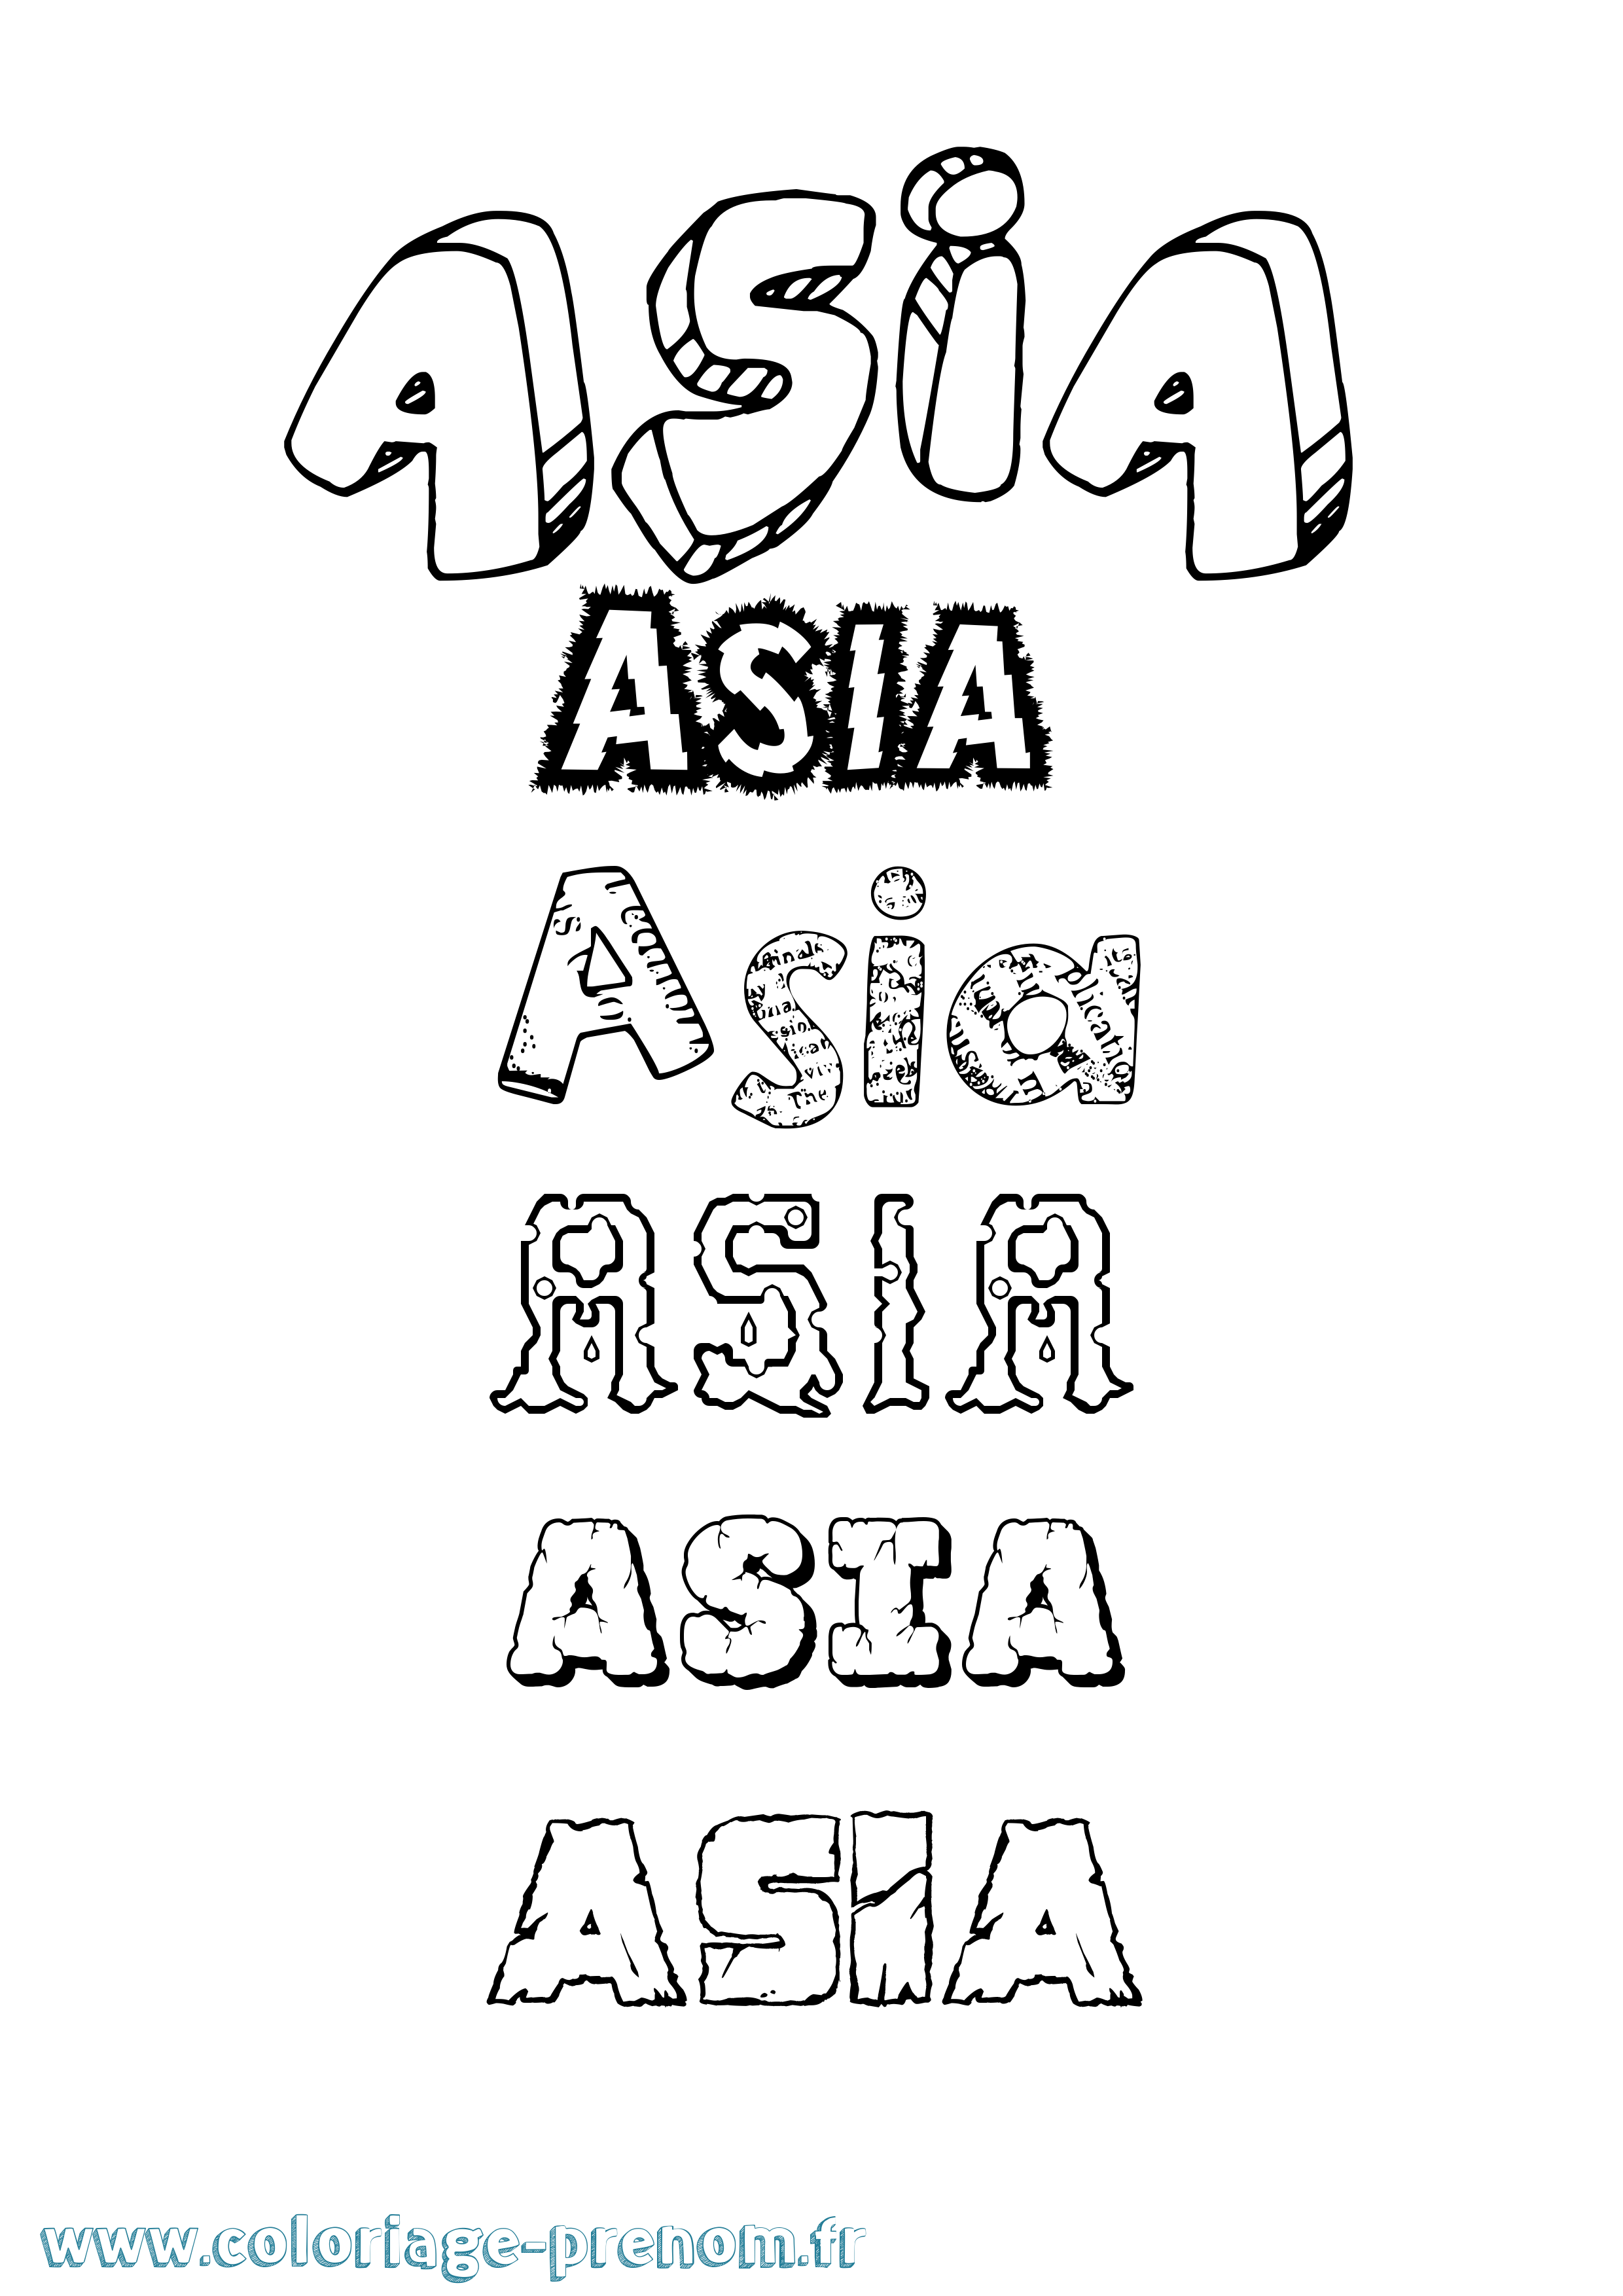 Coloriage prénom Asia Destructuré